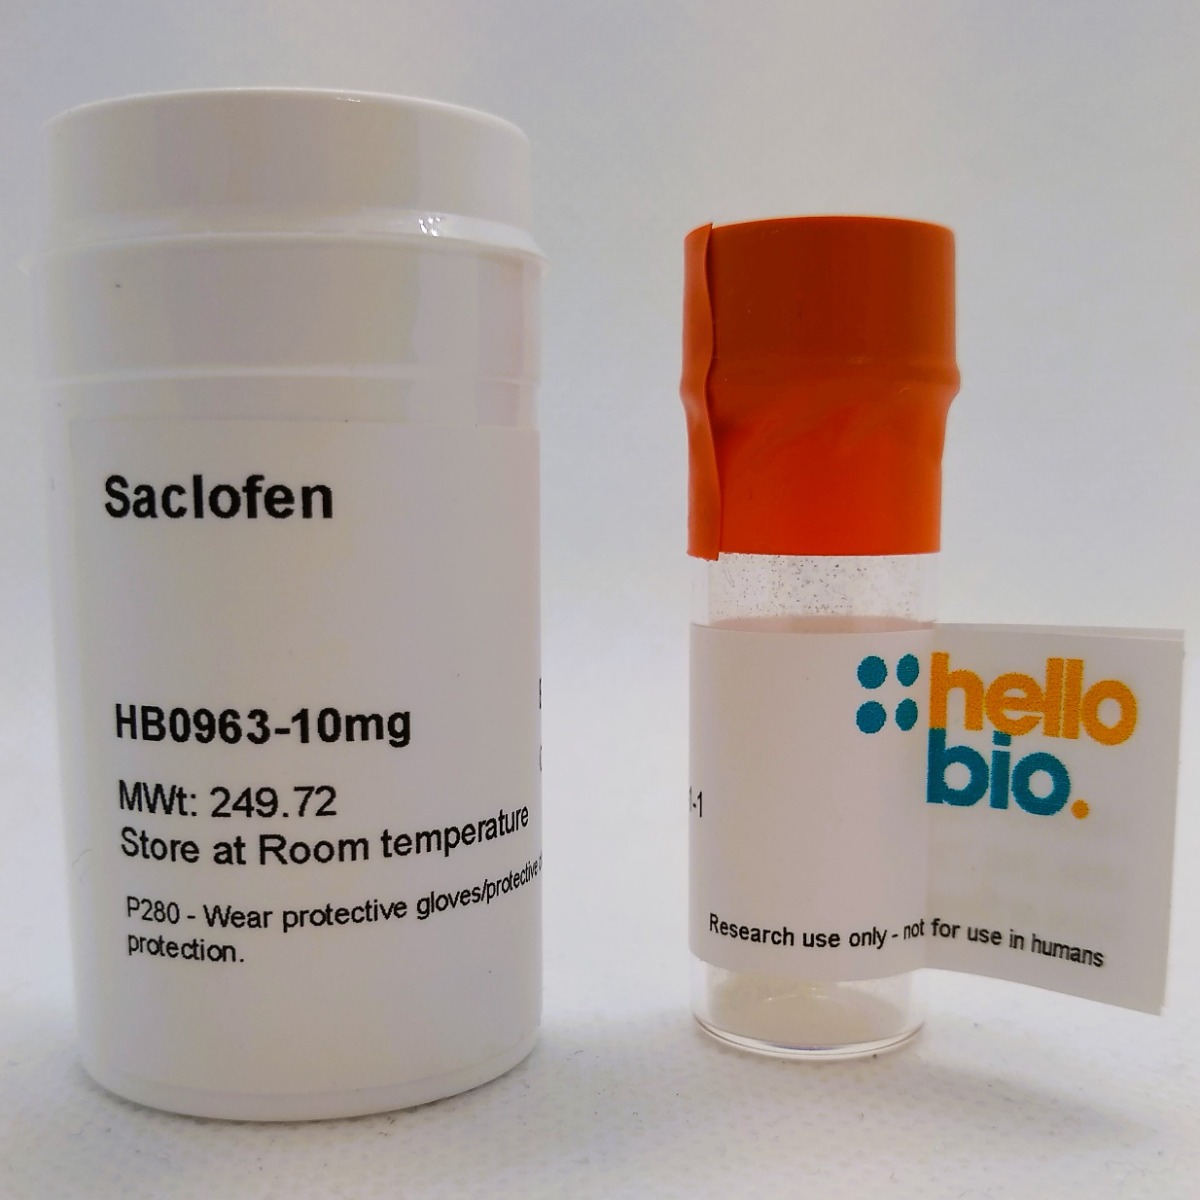 Saclofen product vial image | Hello Bio